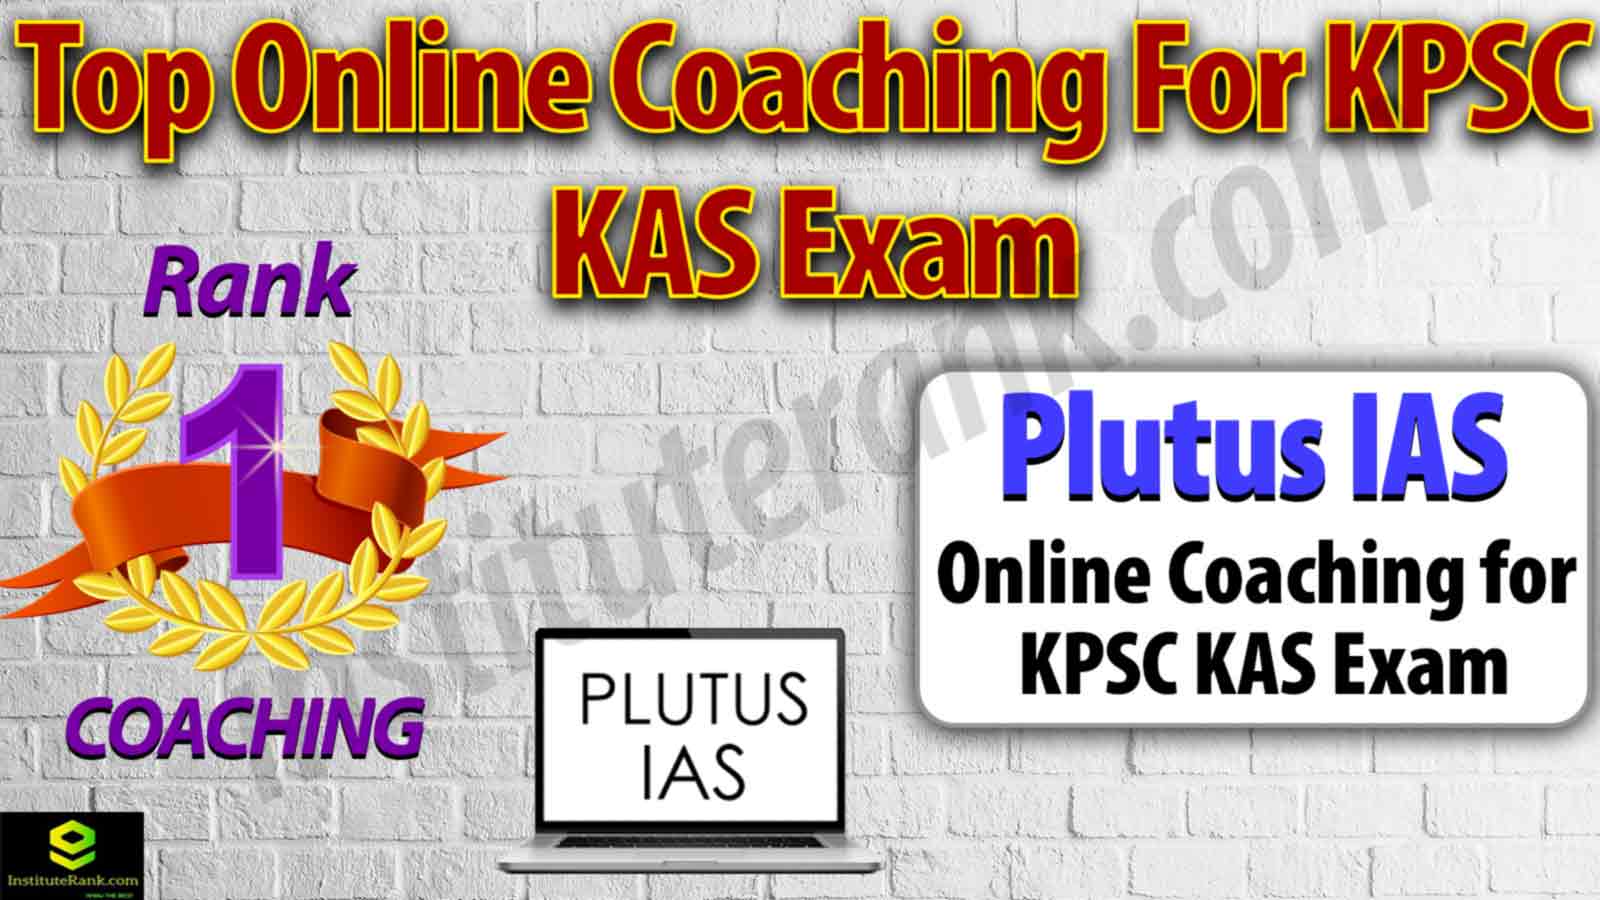 Top Online Coaching for KPSC KAS Exam